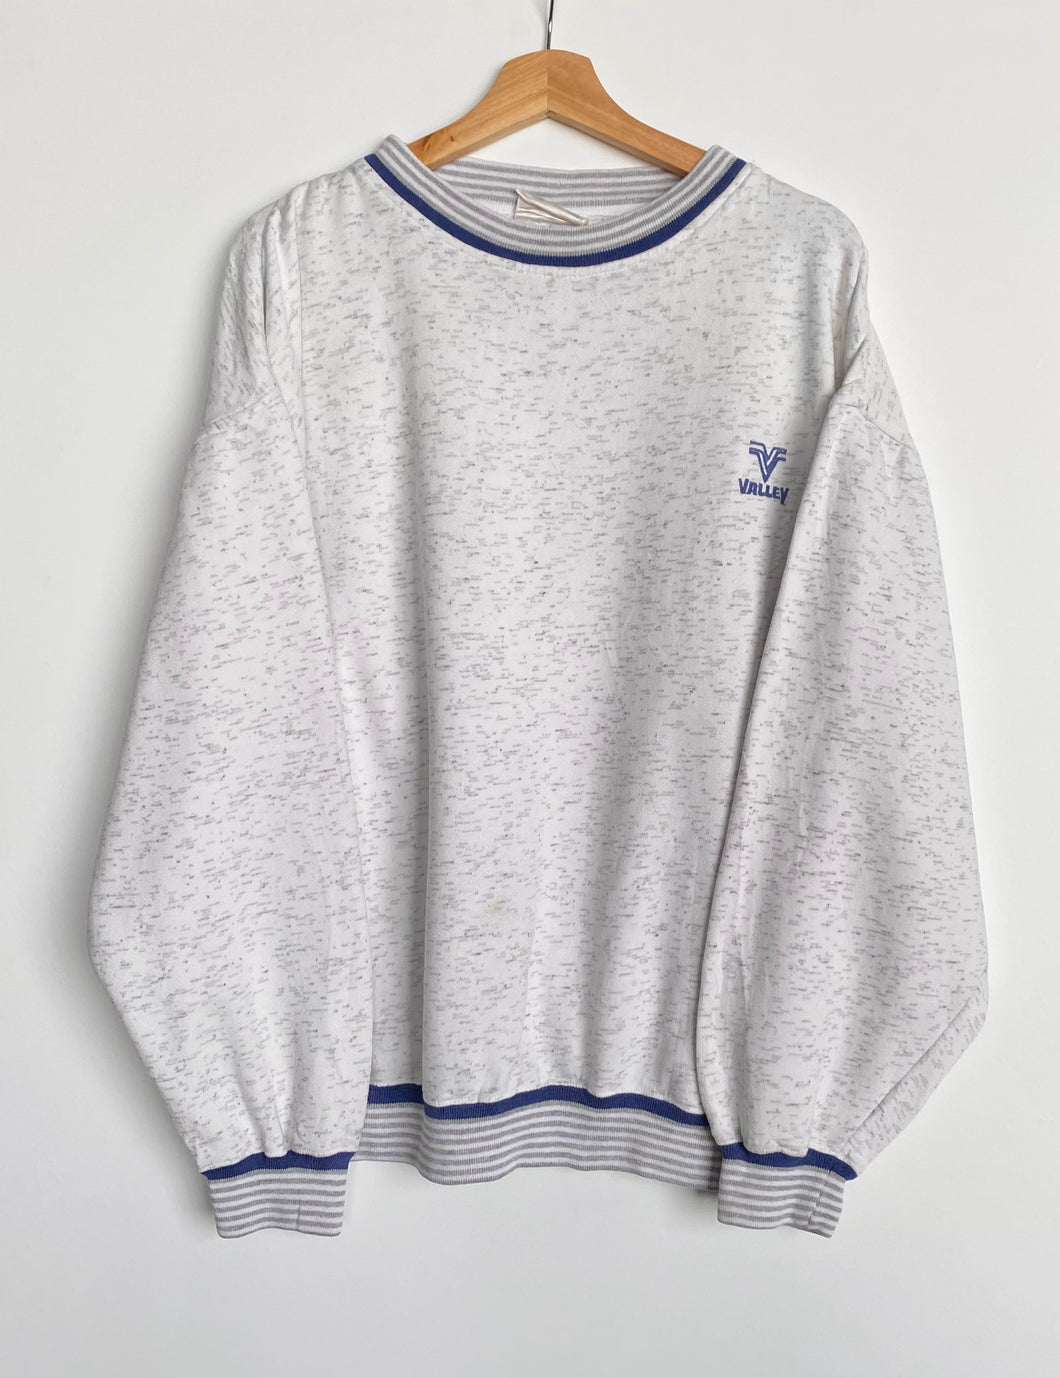 90s Embroidered sweatshirt (L)